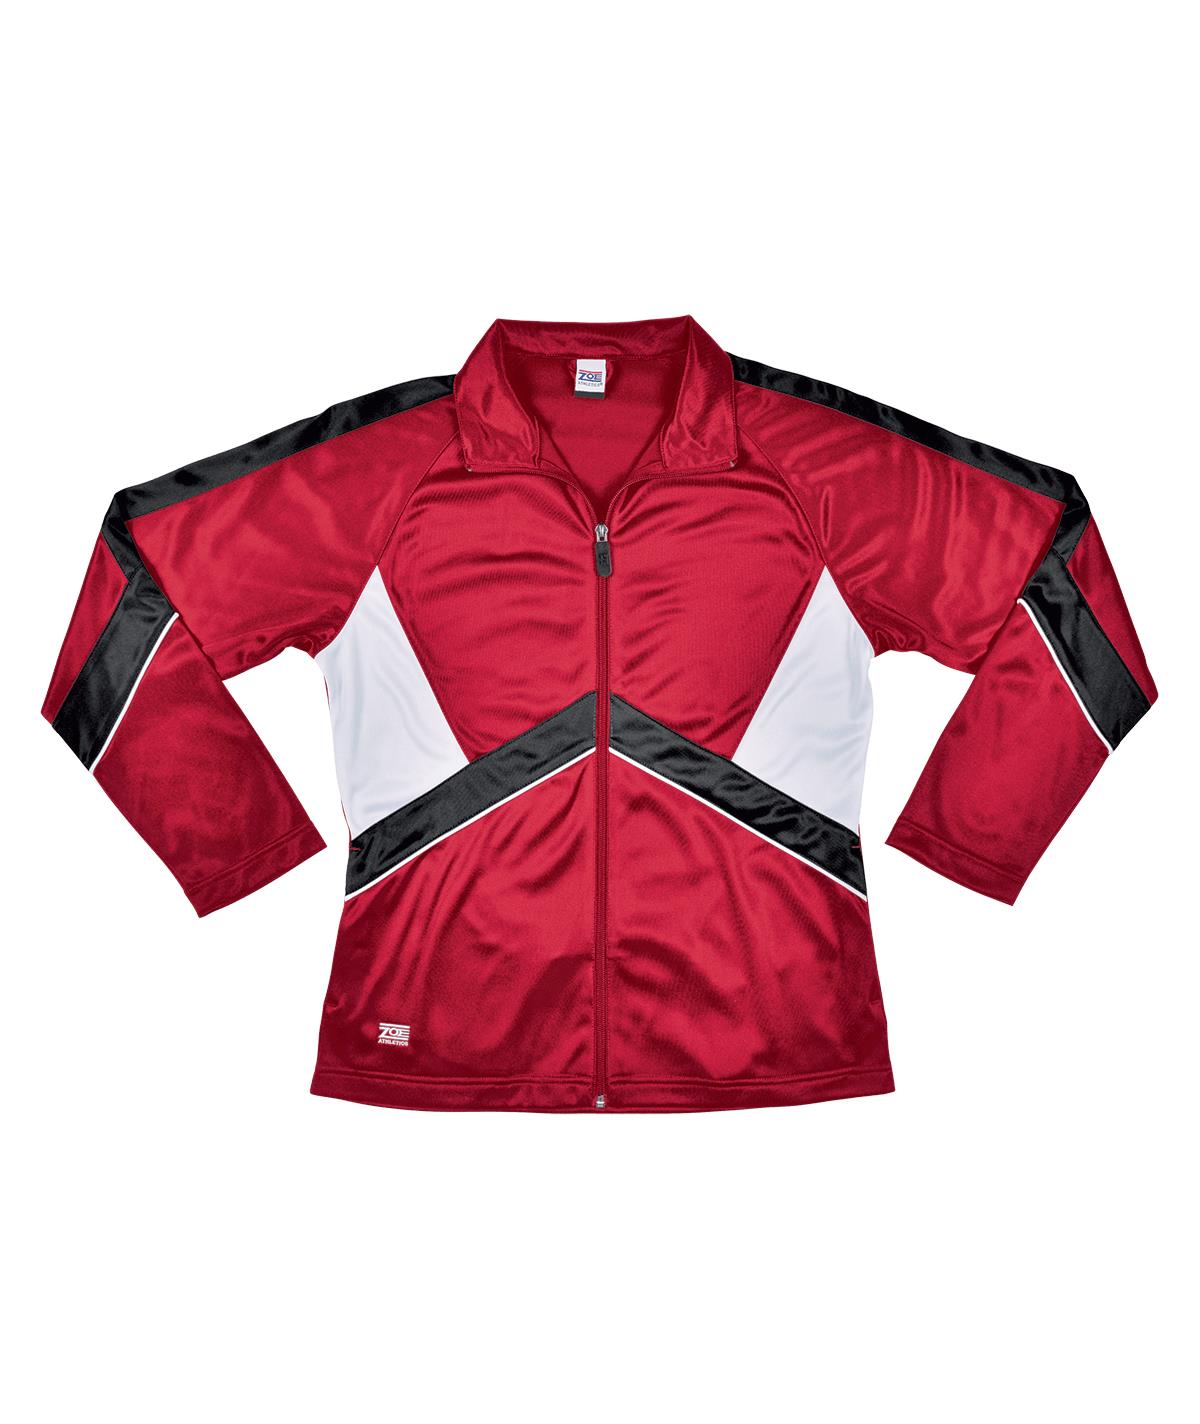 Zoe Athletics Horizon Jacket